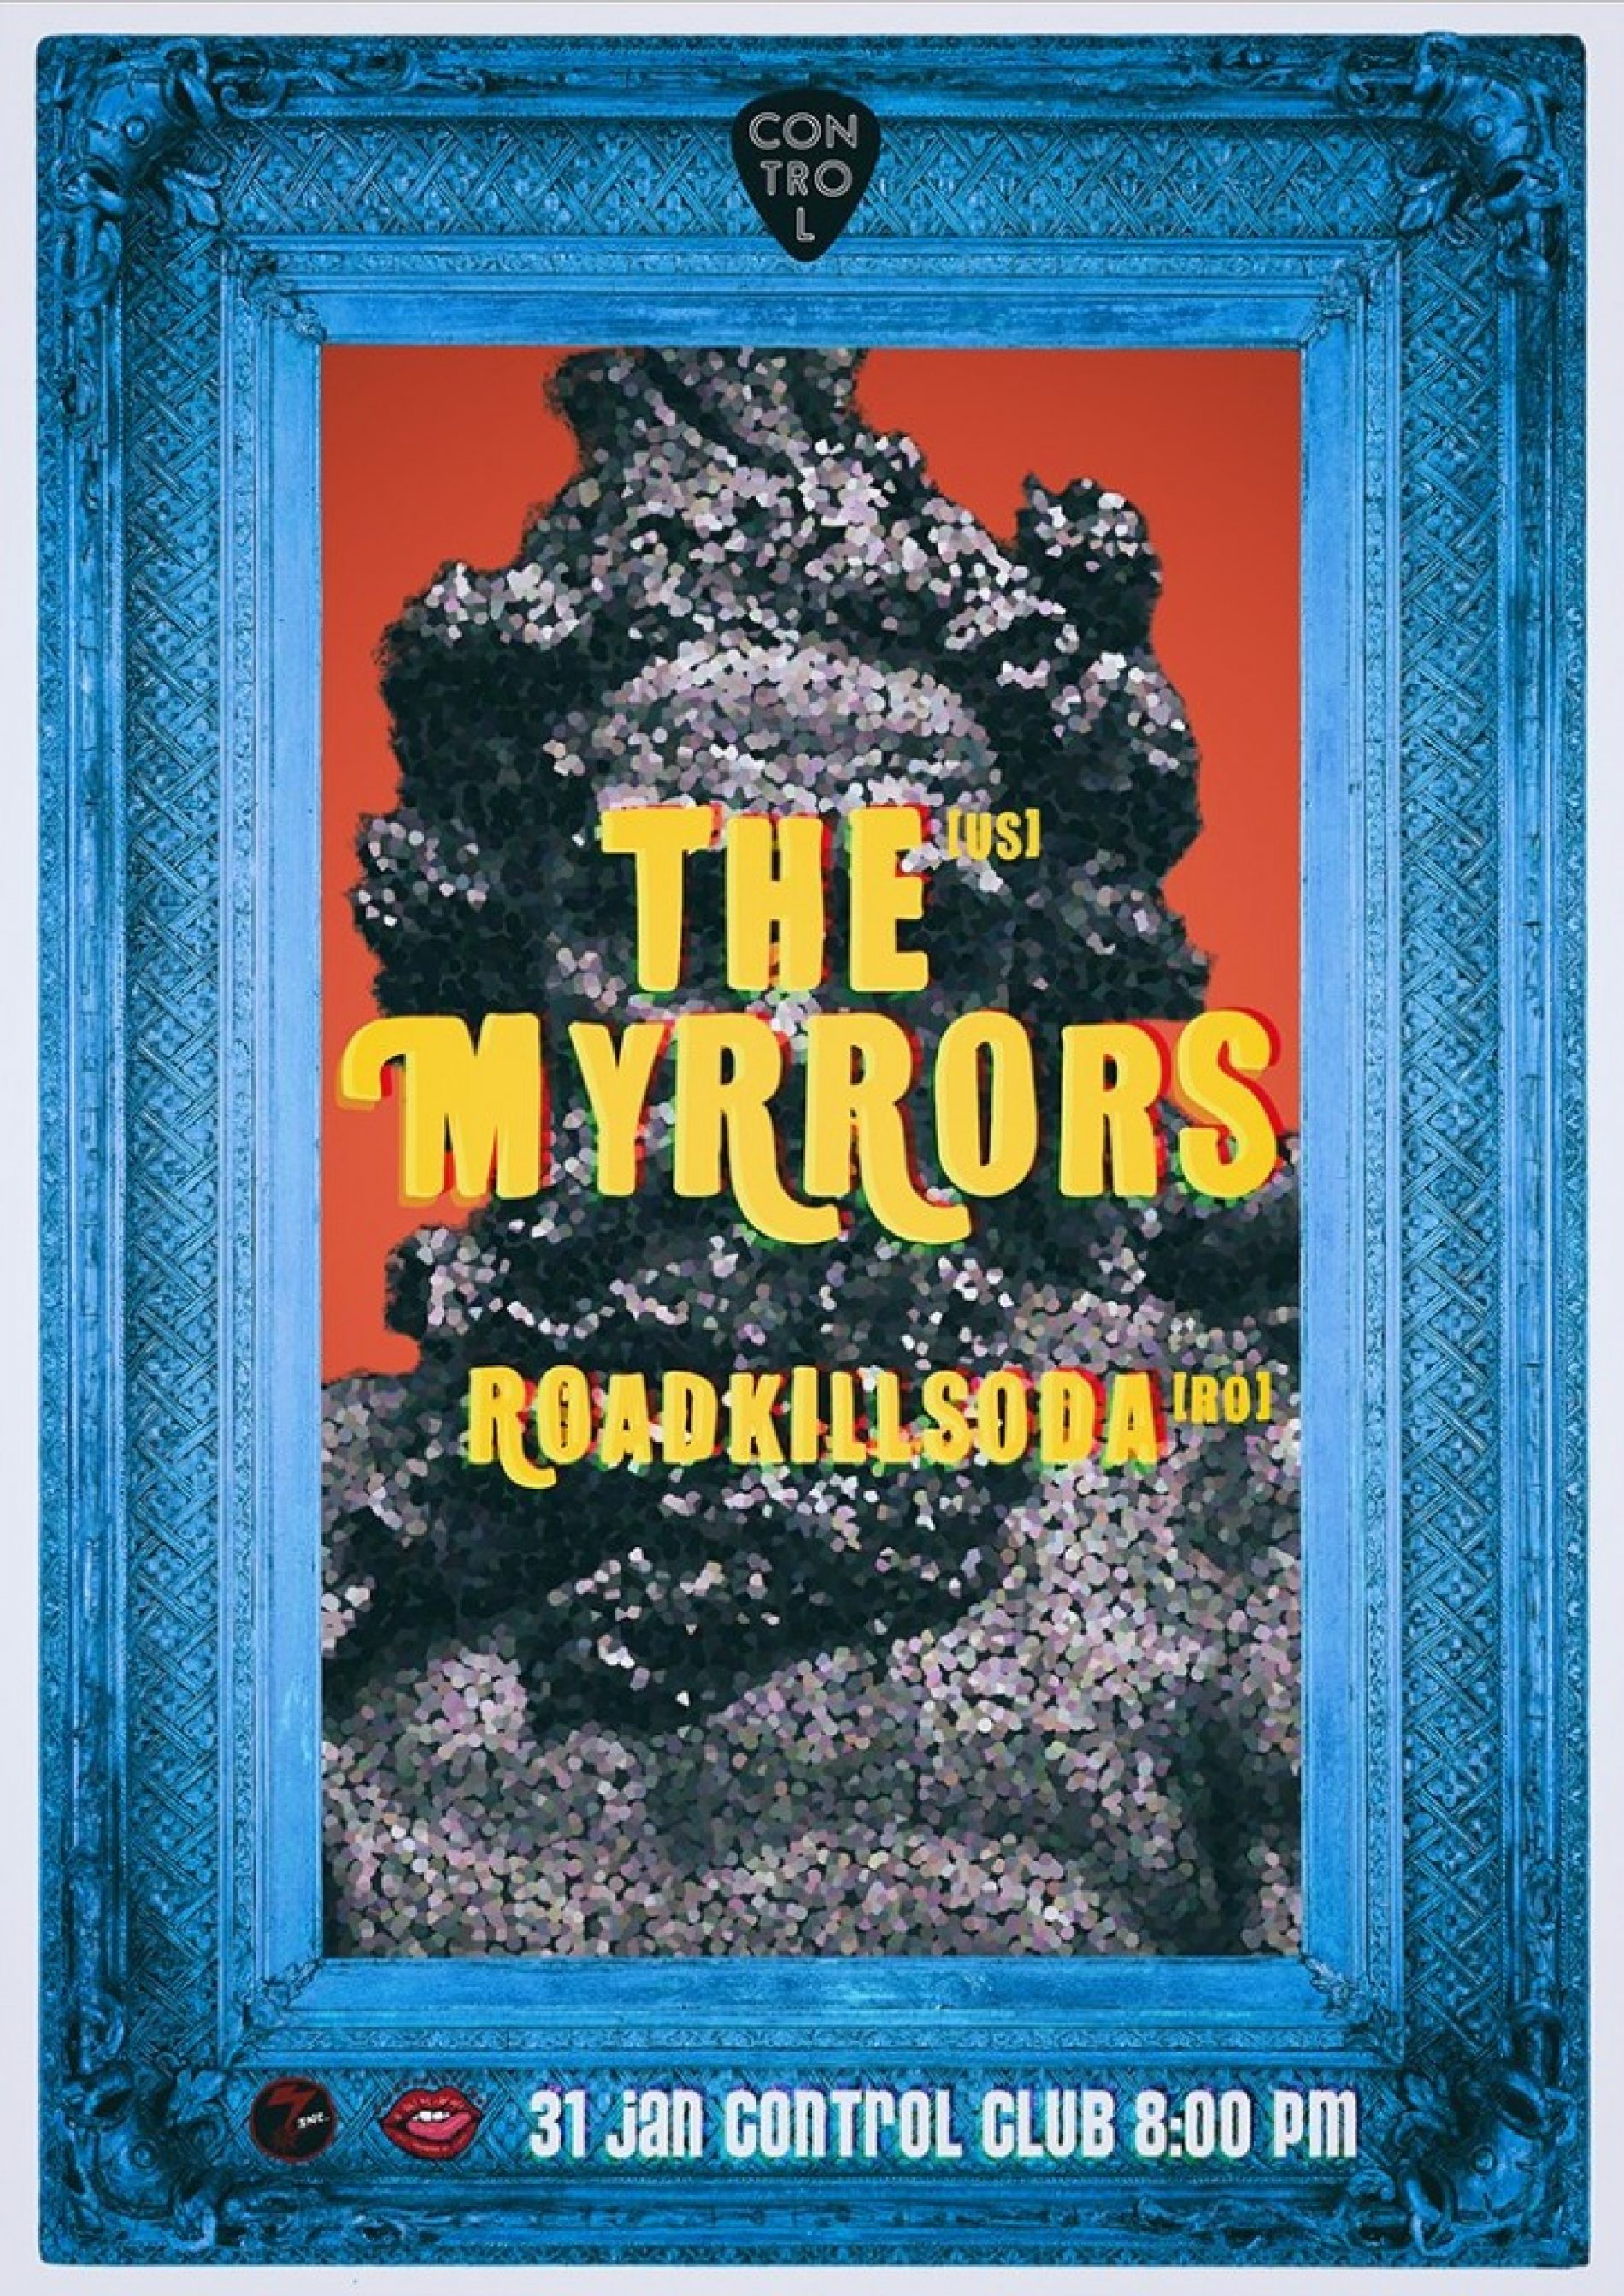 Psychedelicious prezintă: The Myrrors [US] și RoadkillSoda [RO] pe 31 ianuarie in Control Club